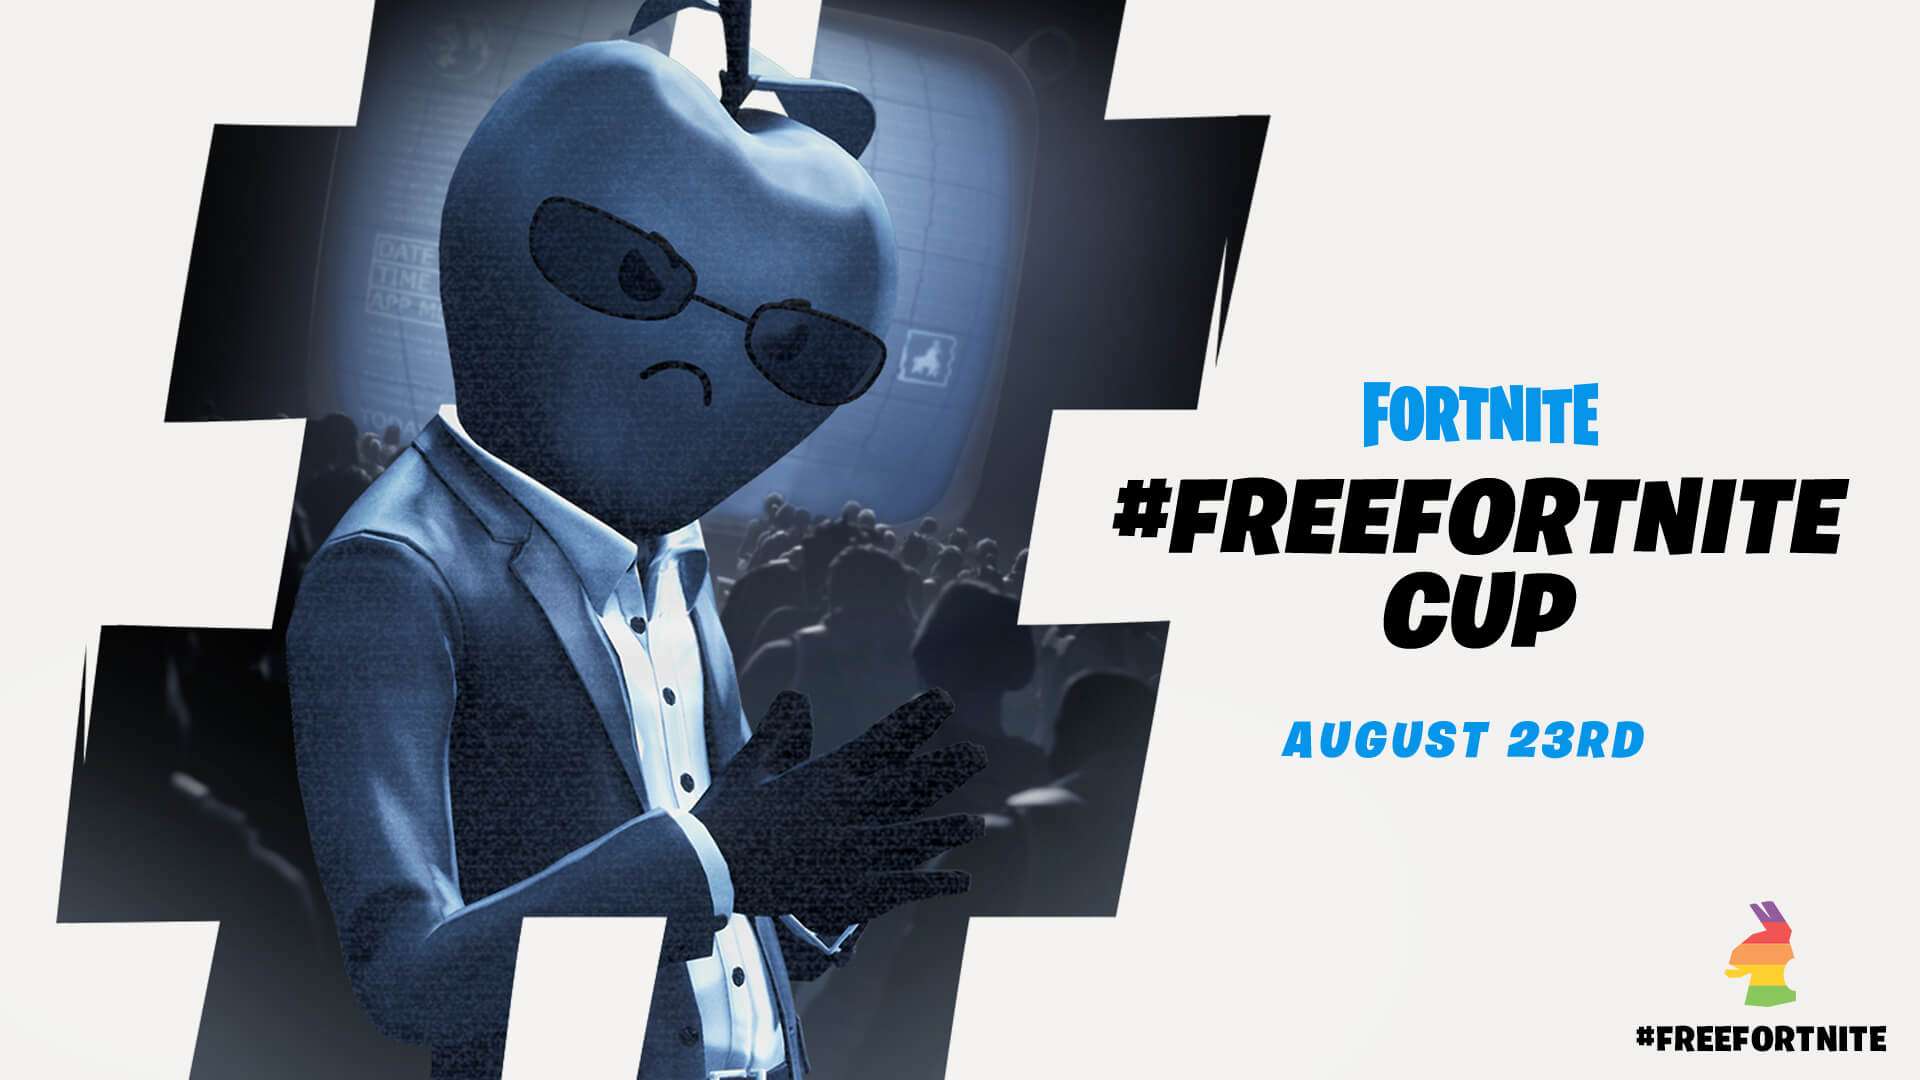 FreeFortnite event